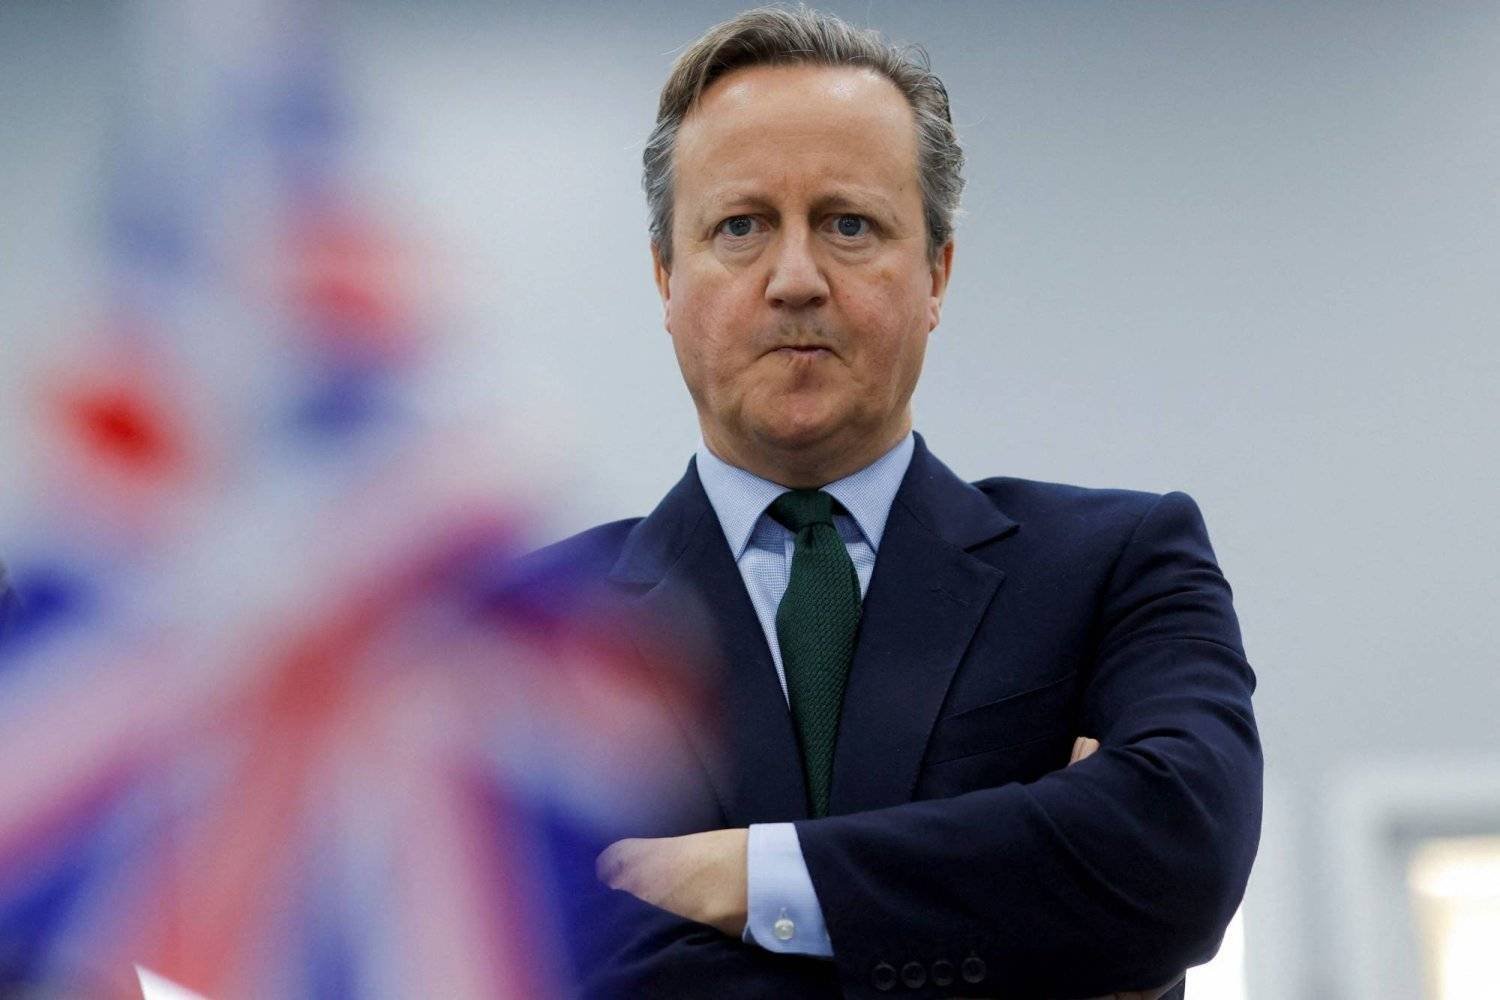 UK Foreign Secretary David Cameron - File/AFP
